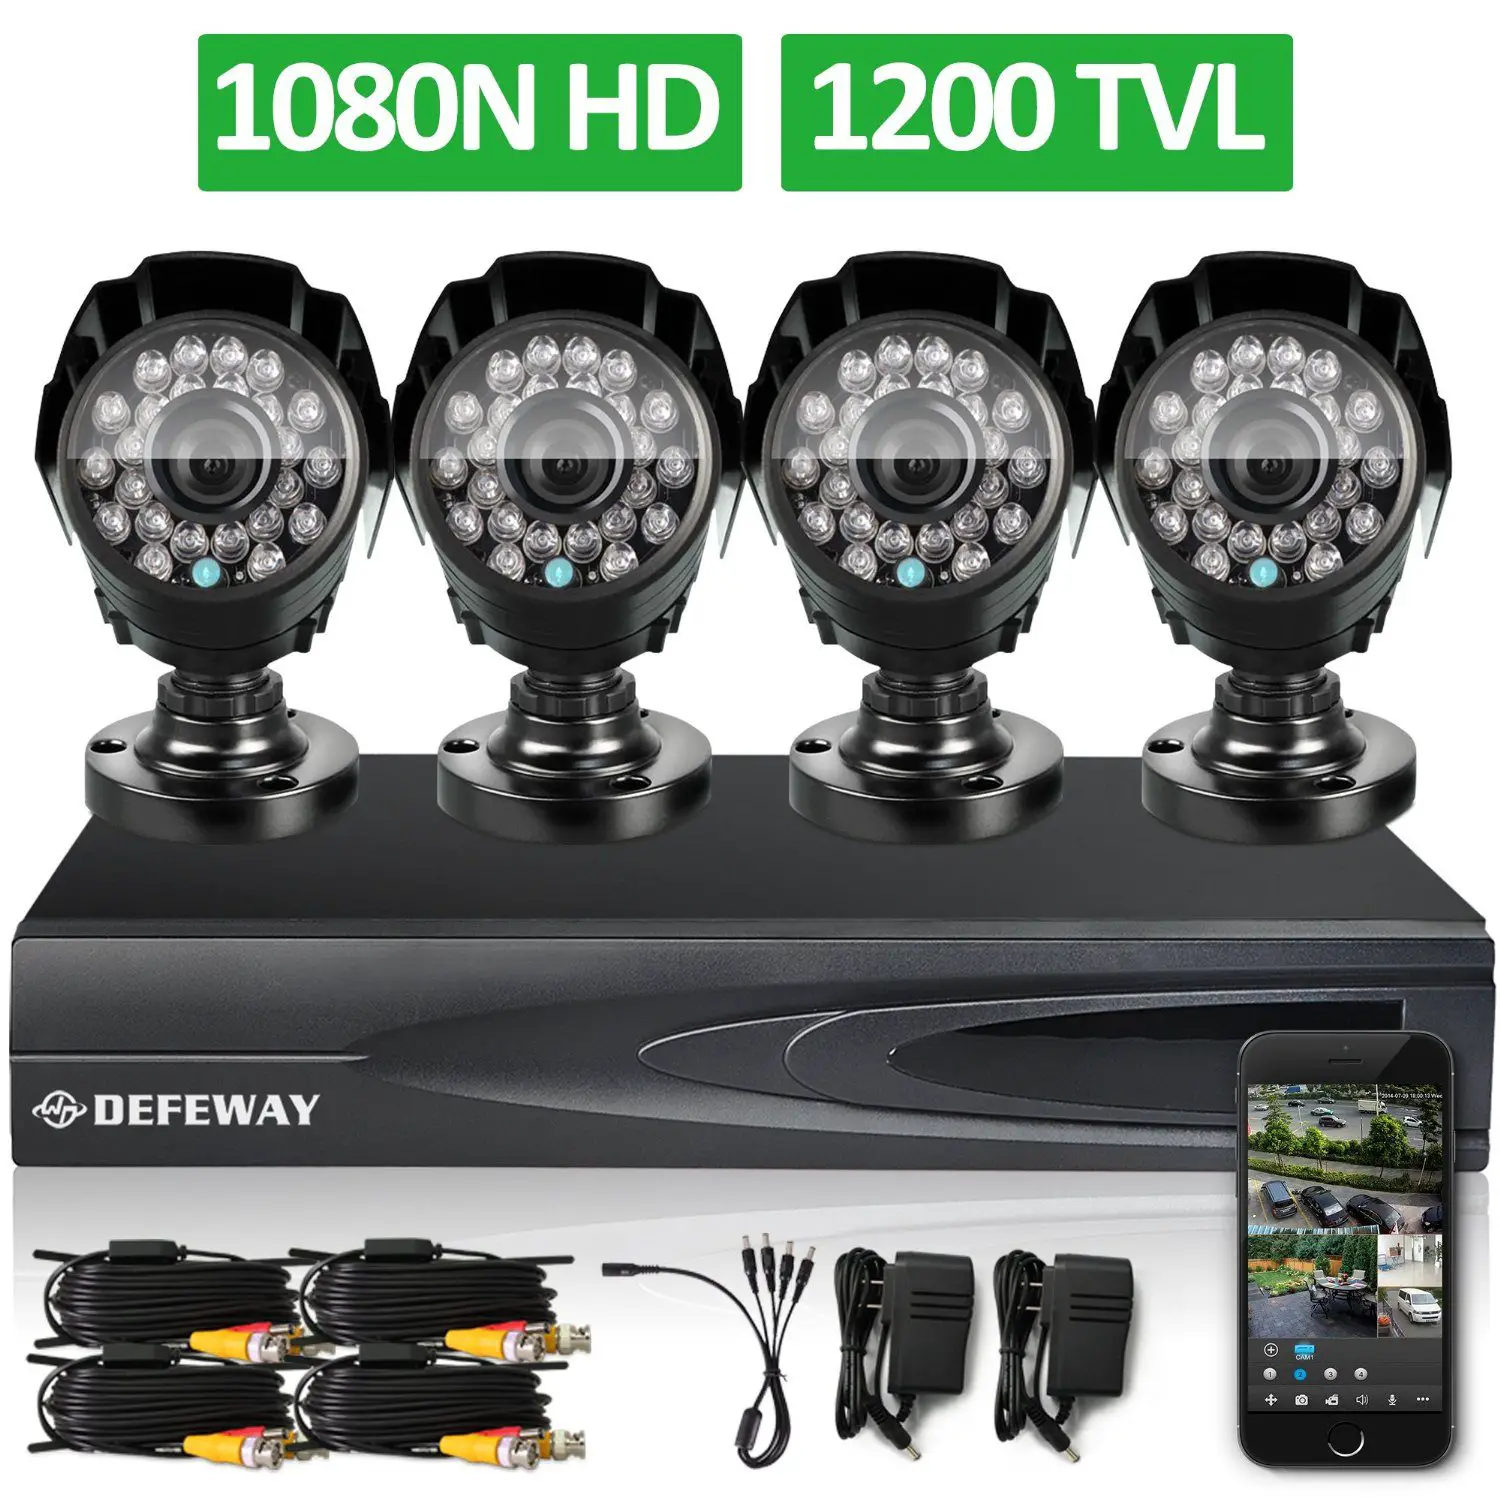 DEFEWAY 1080N DVR 1200TVL 720P HD Outdoor Home Security Video Surveillance Camera System